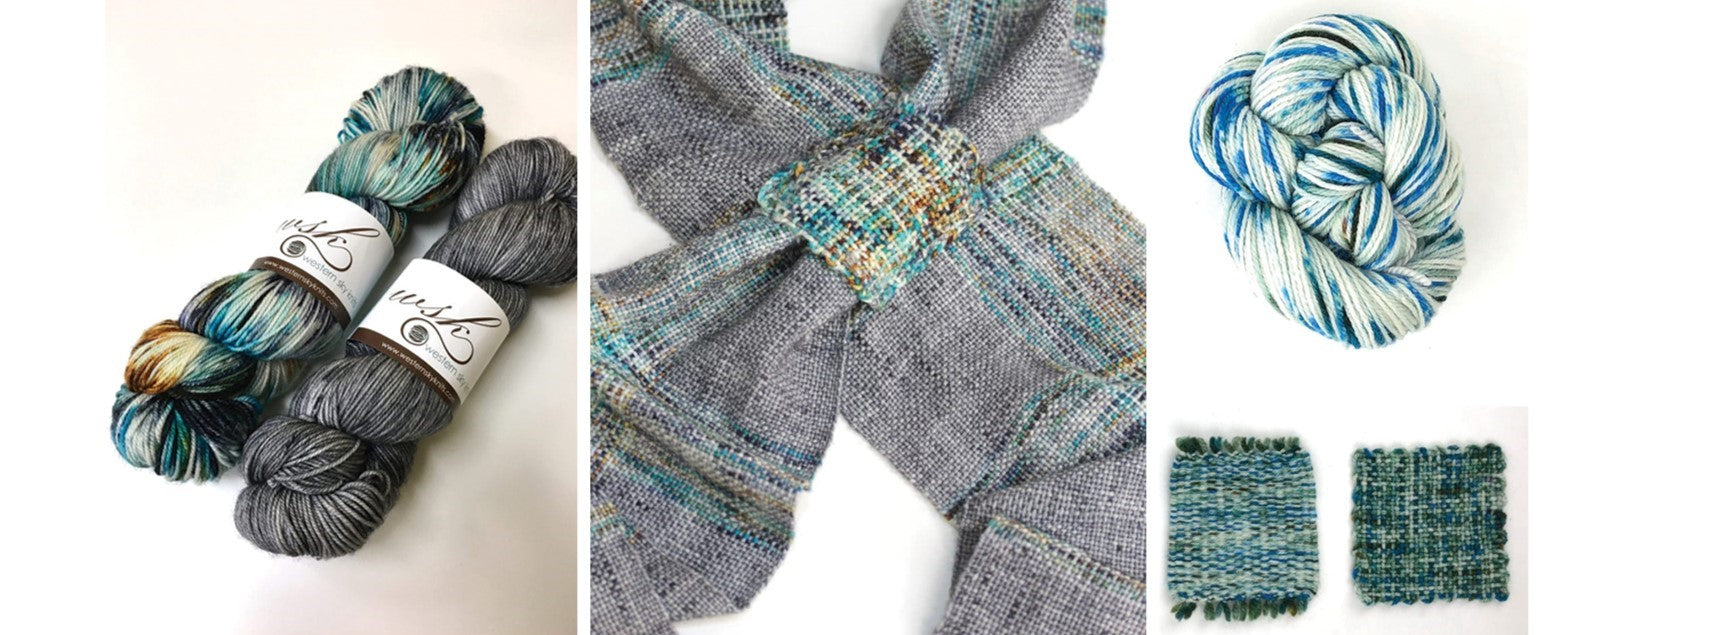 Weaving with Knitting Yarn?